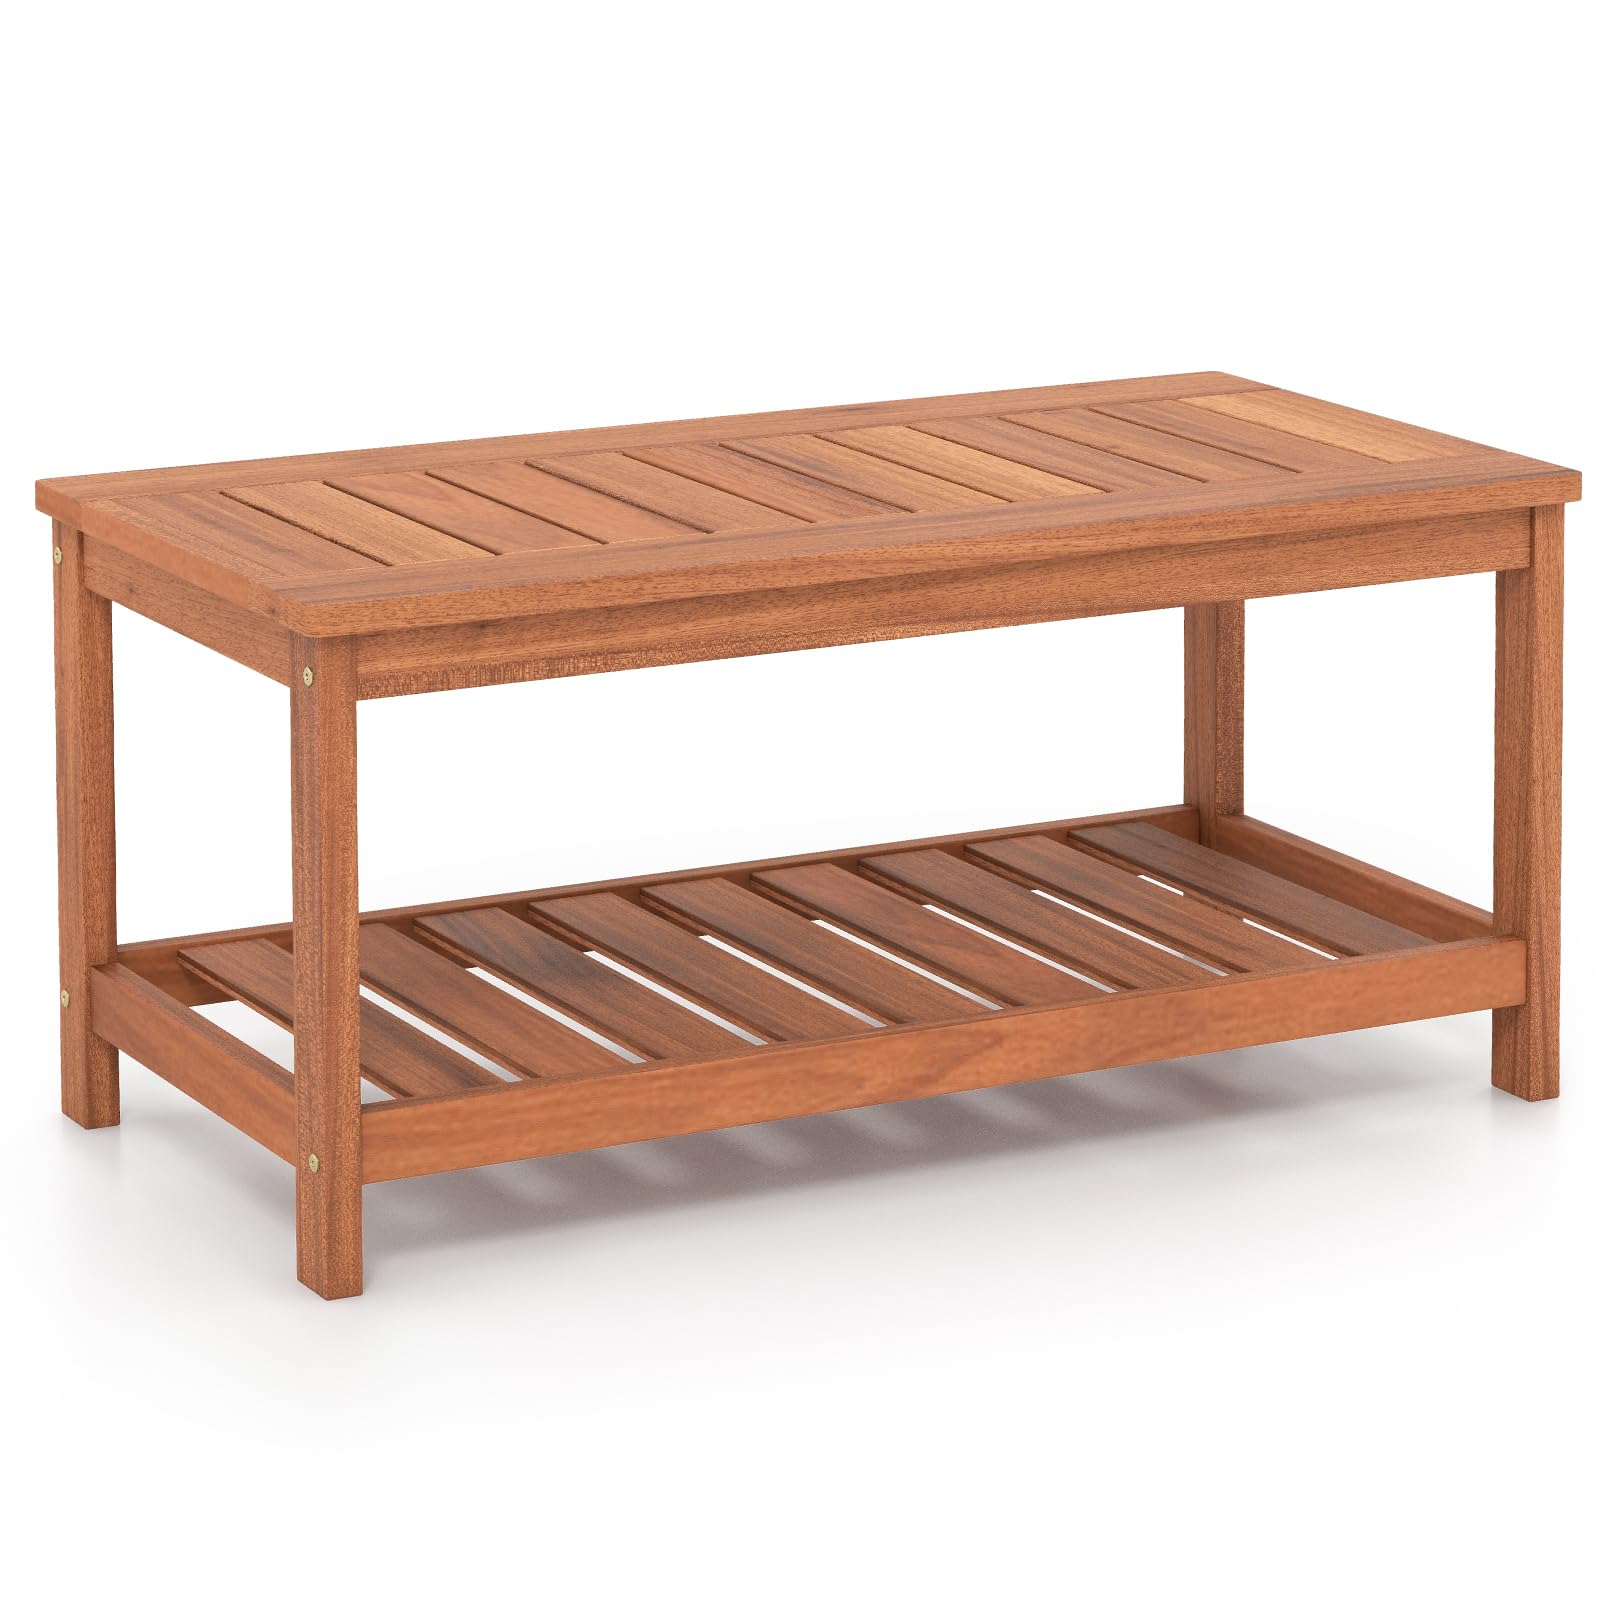 Giantex Hardwood Patio Coffee Table - 2-Tier Wooden Coffee Table